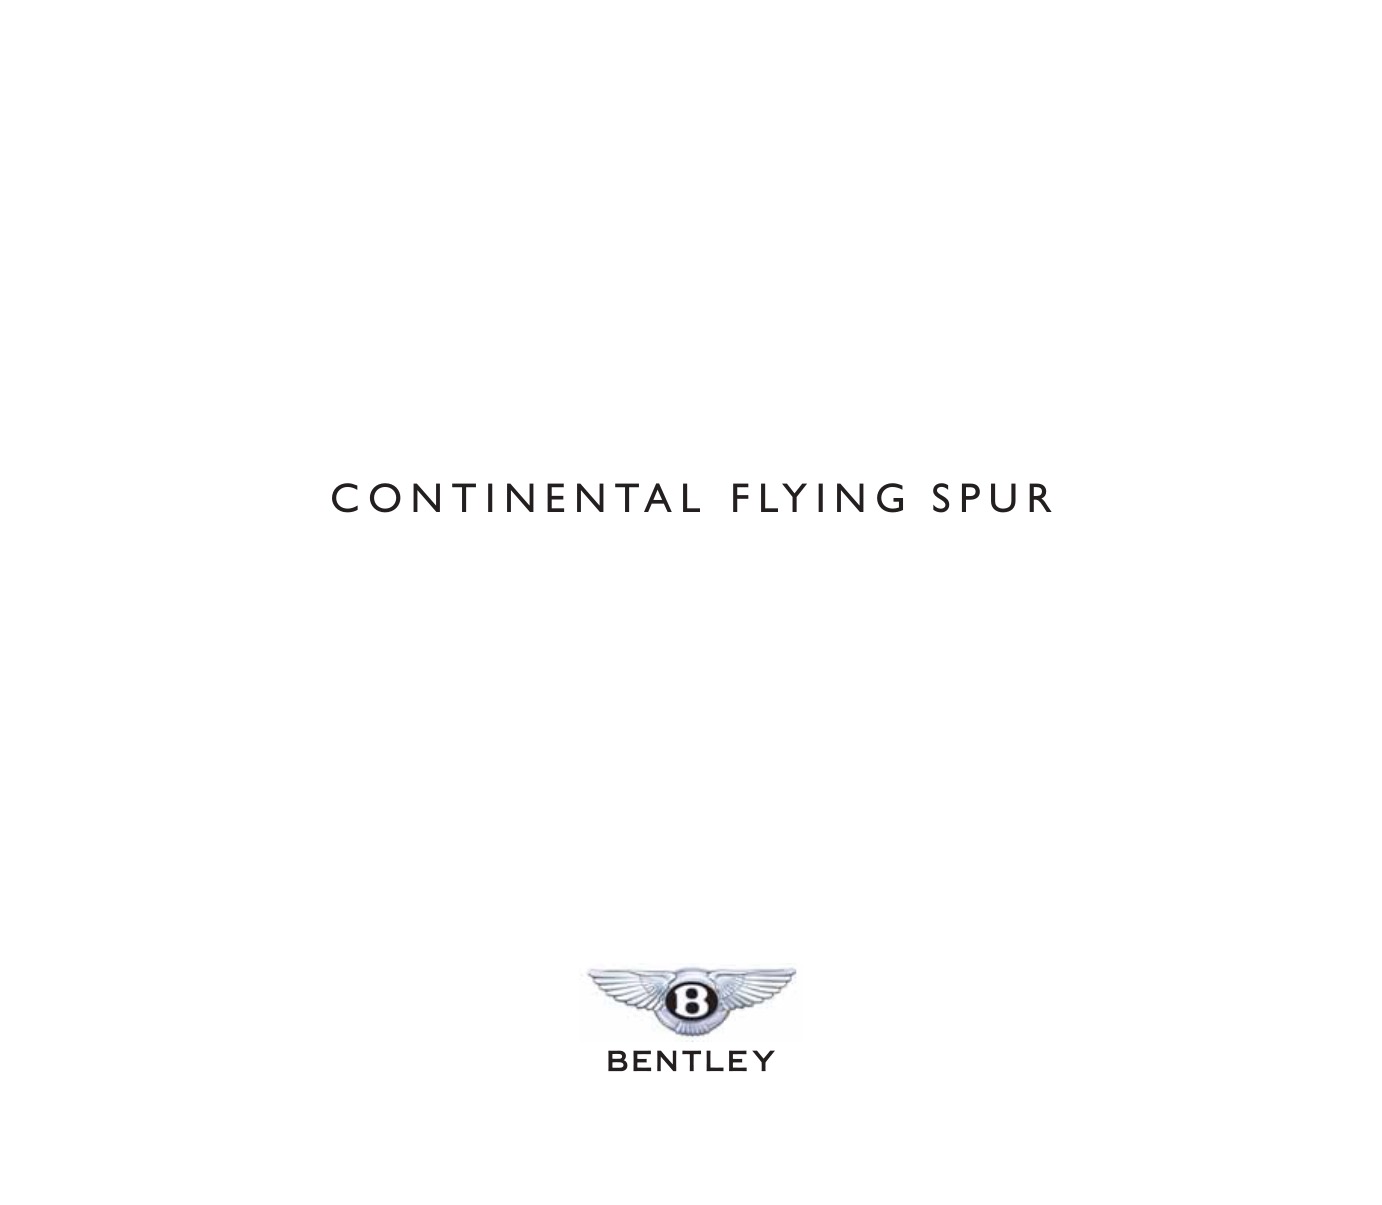 2009 Bentley Continental Flying Spur Brochure